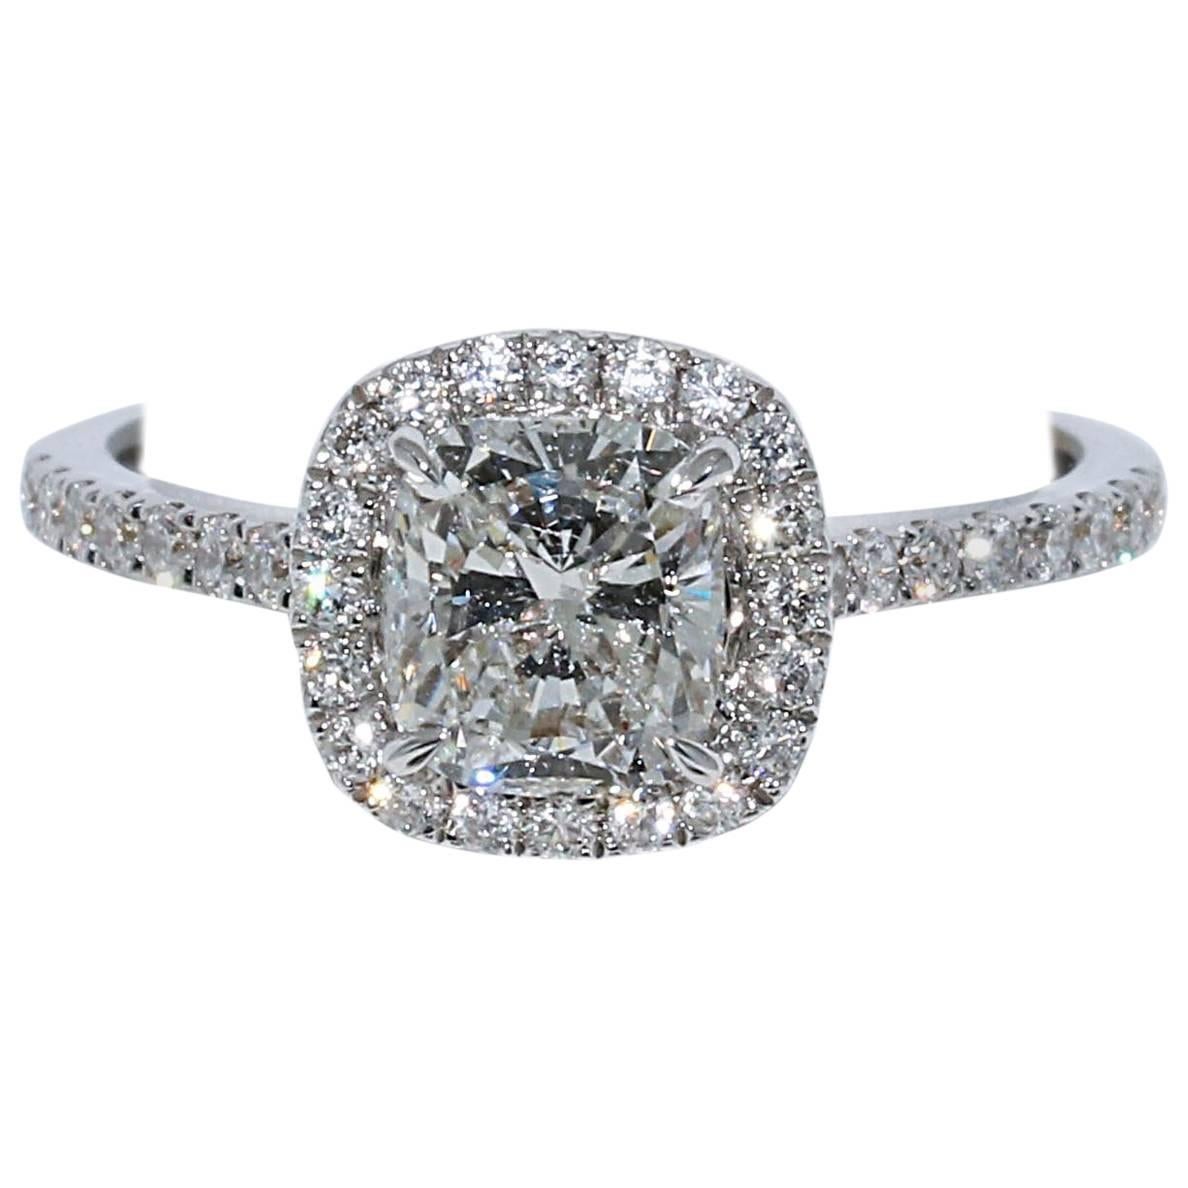 GIA Certified 1.21 Carat Cushion Cut Diamond Halo Engagement Ring